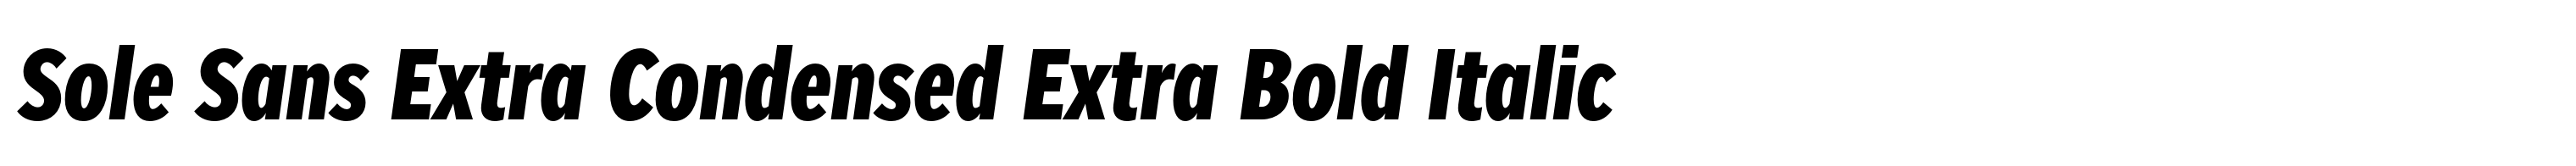 Sole Sans Extra Condensed Extra Bold Italic